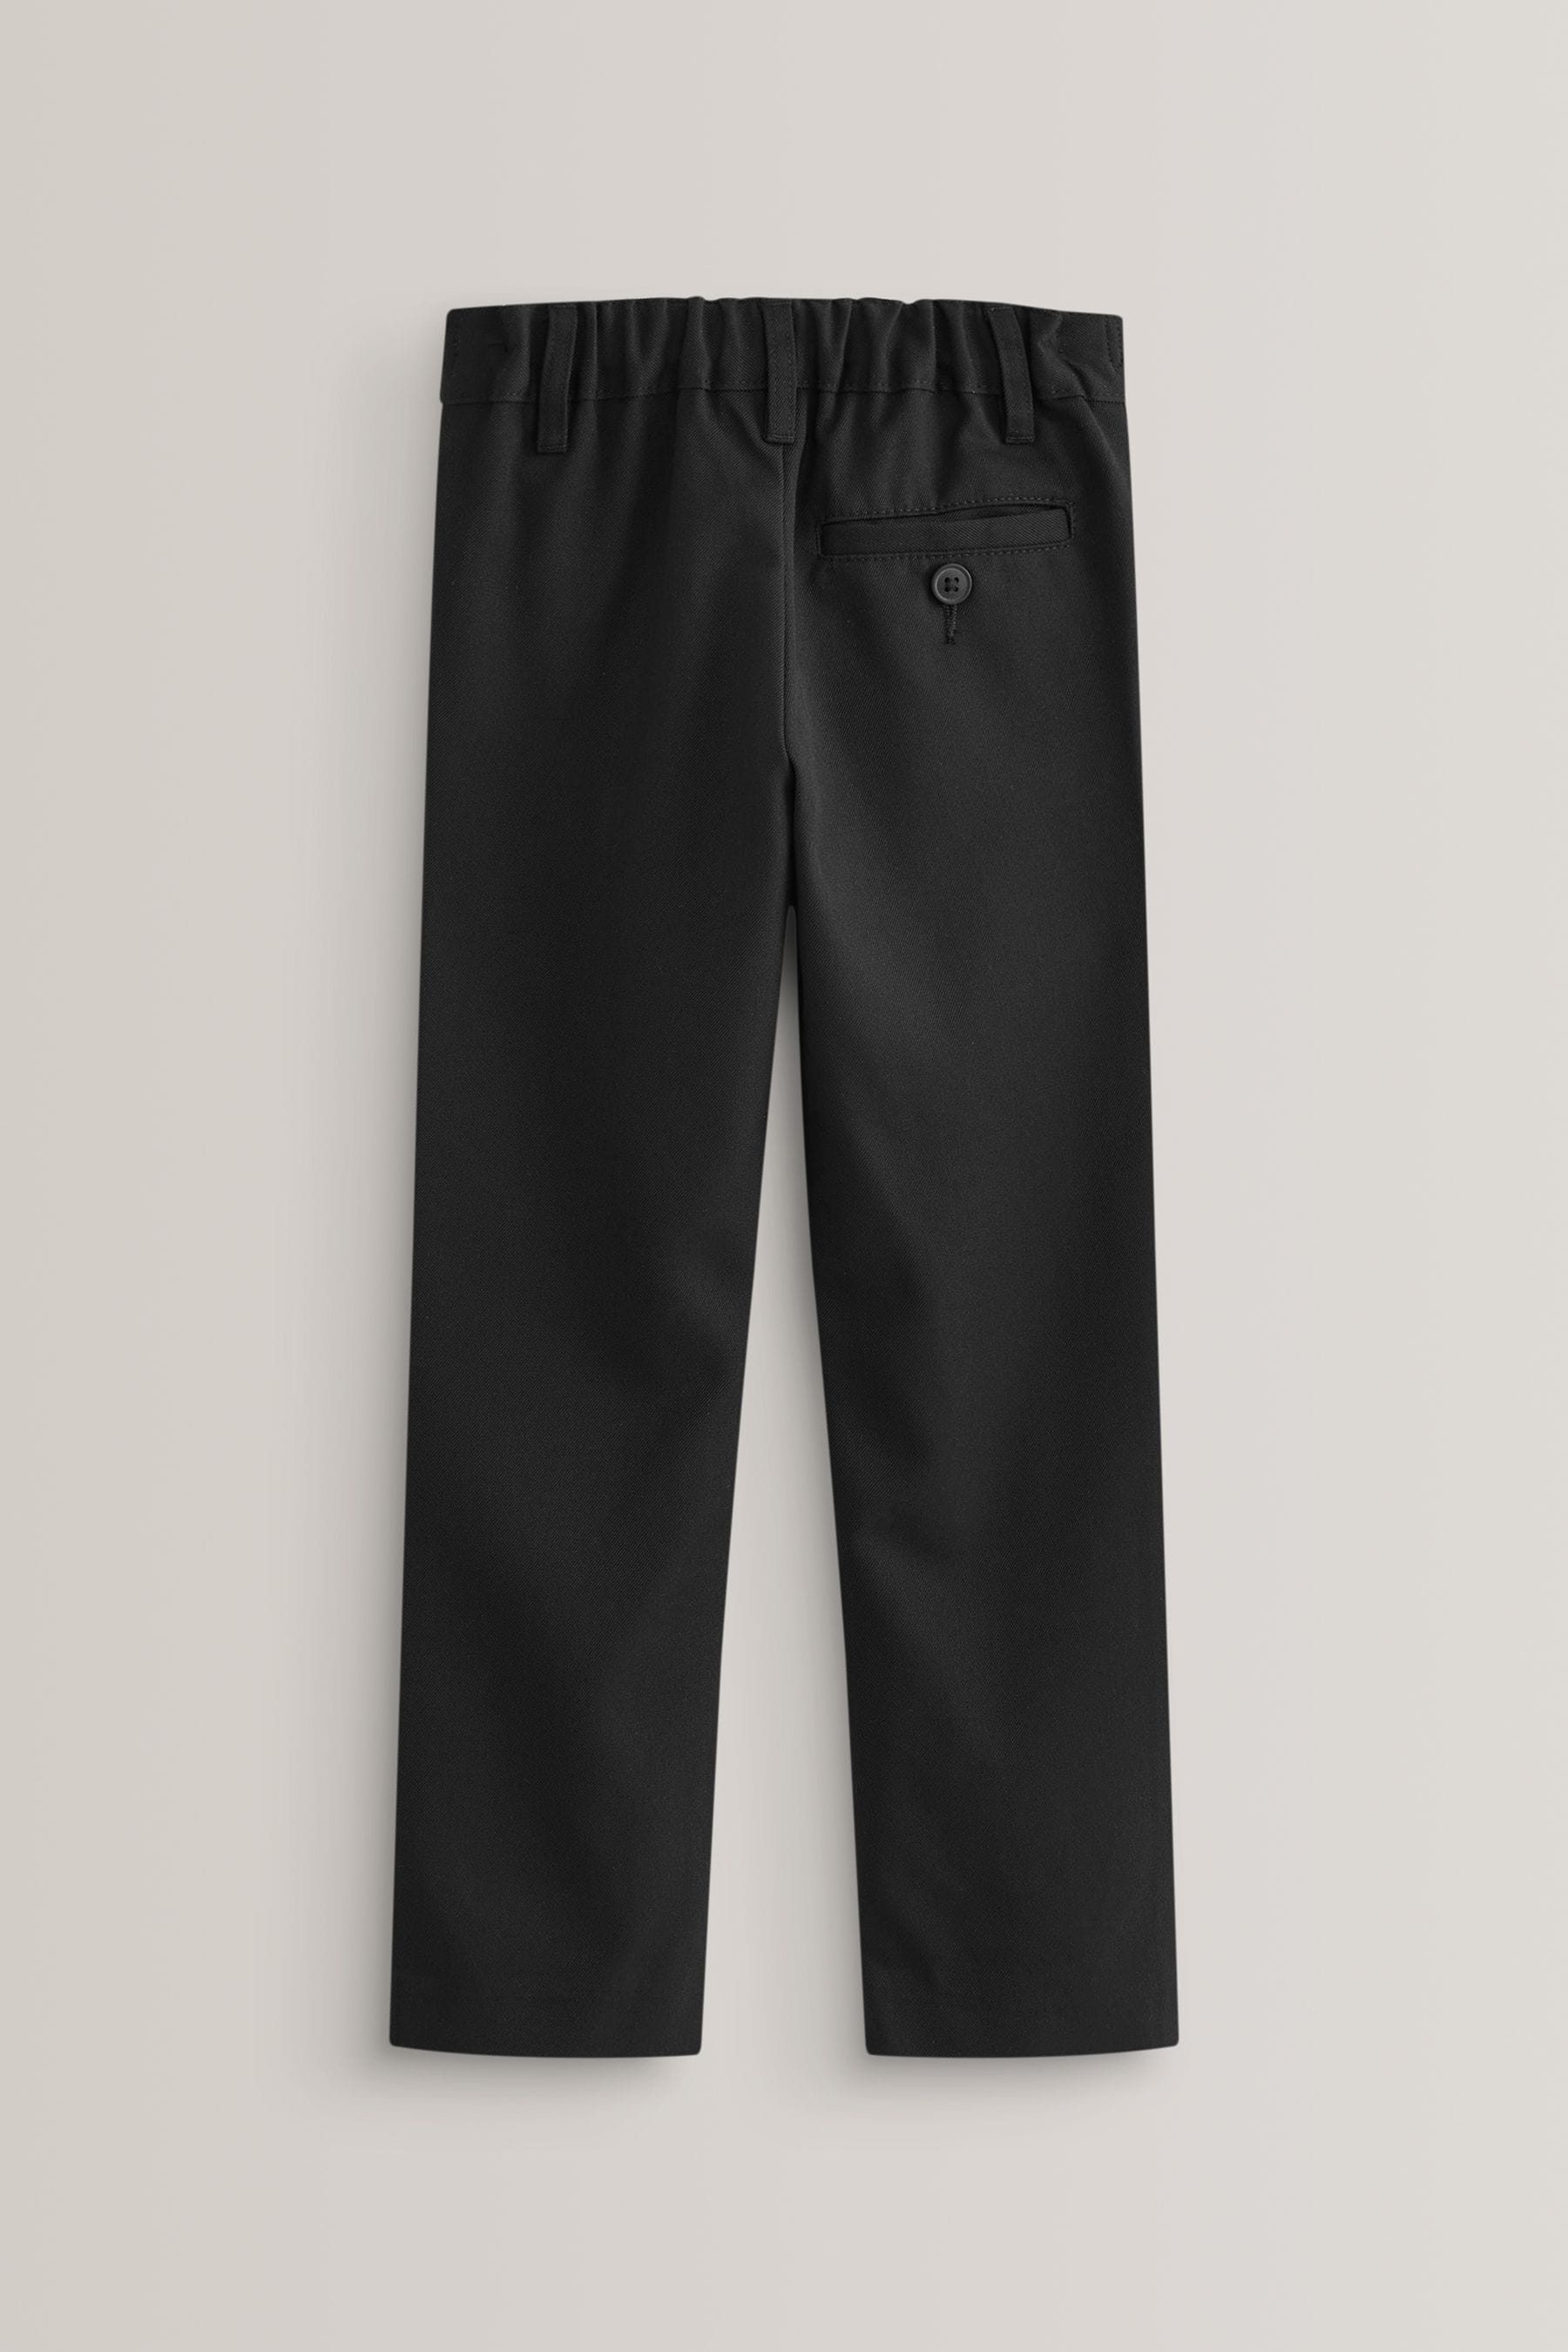 Buy Black Slim Waist School Formal Slim Leg Trousers (3-17yrs) from the ...